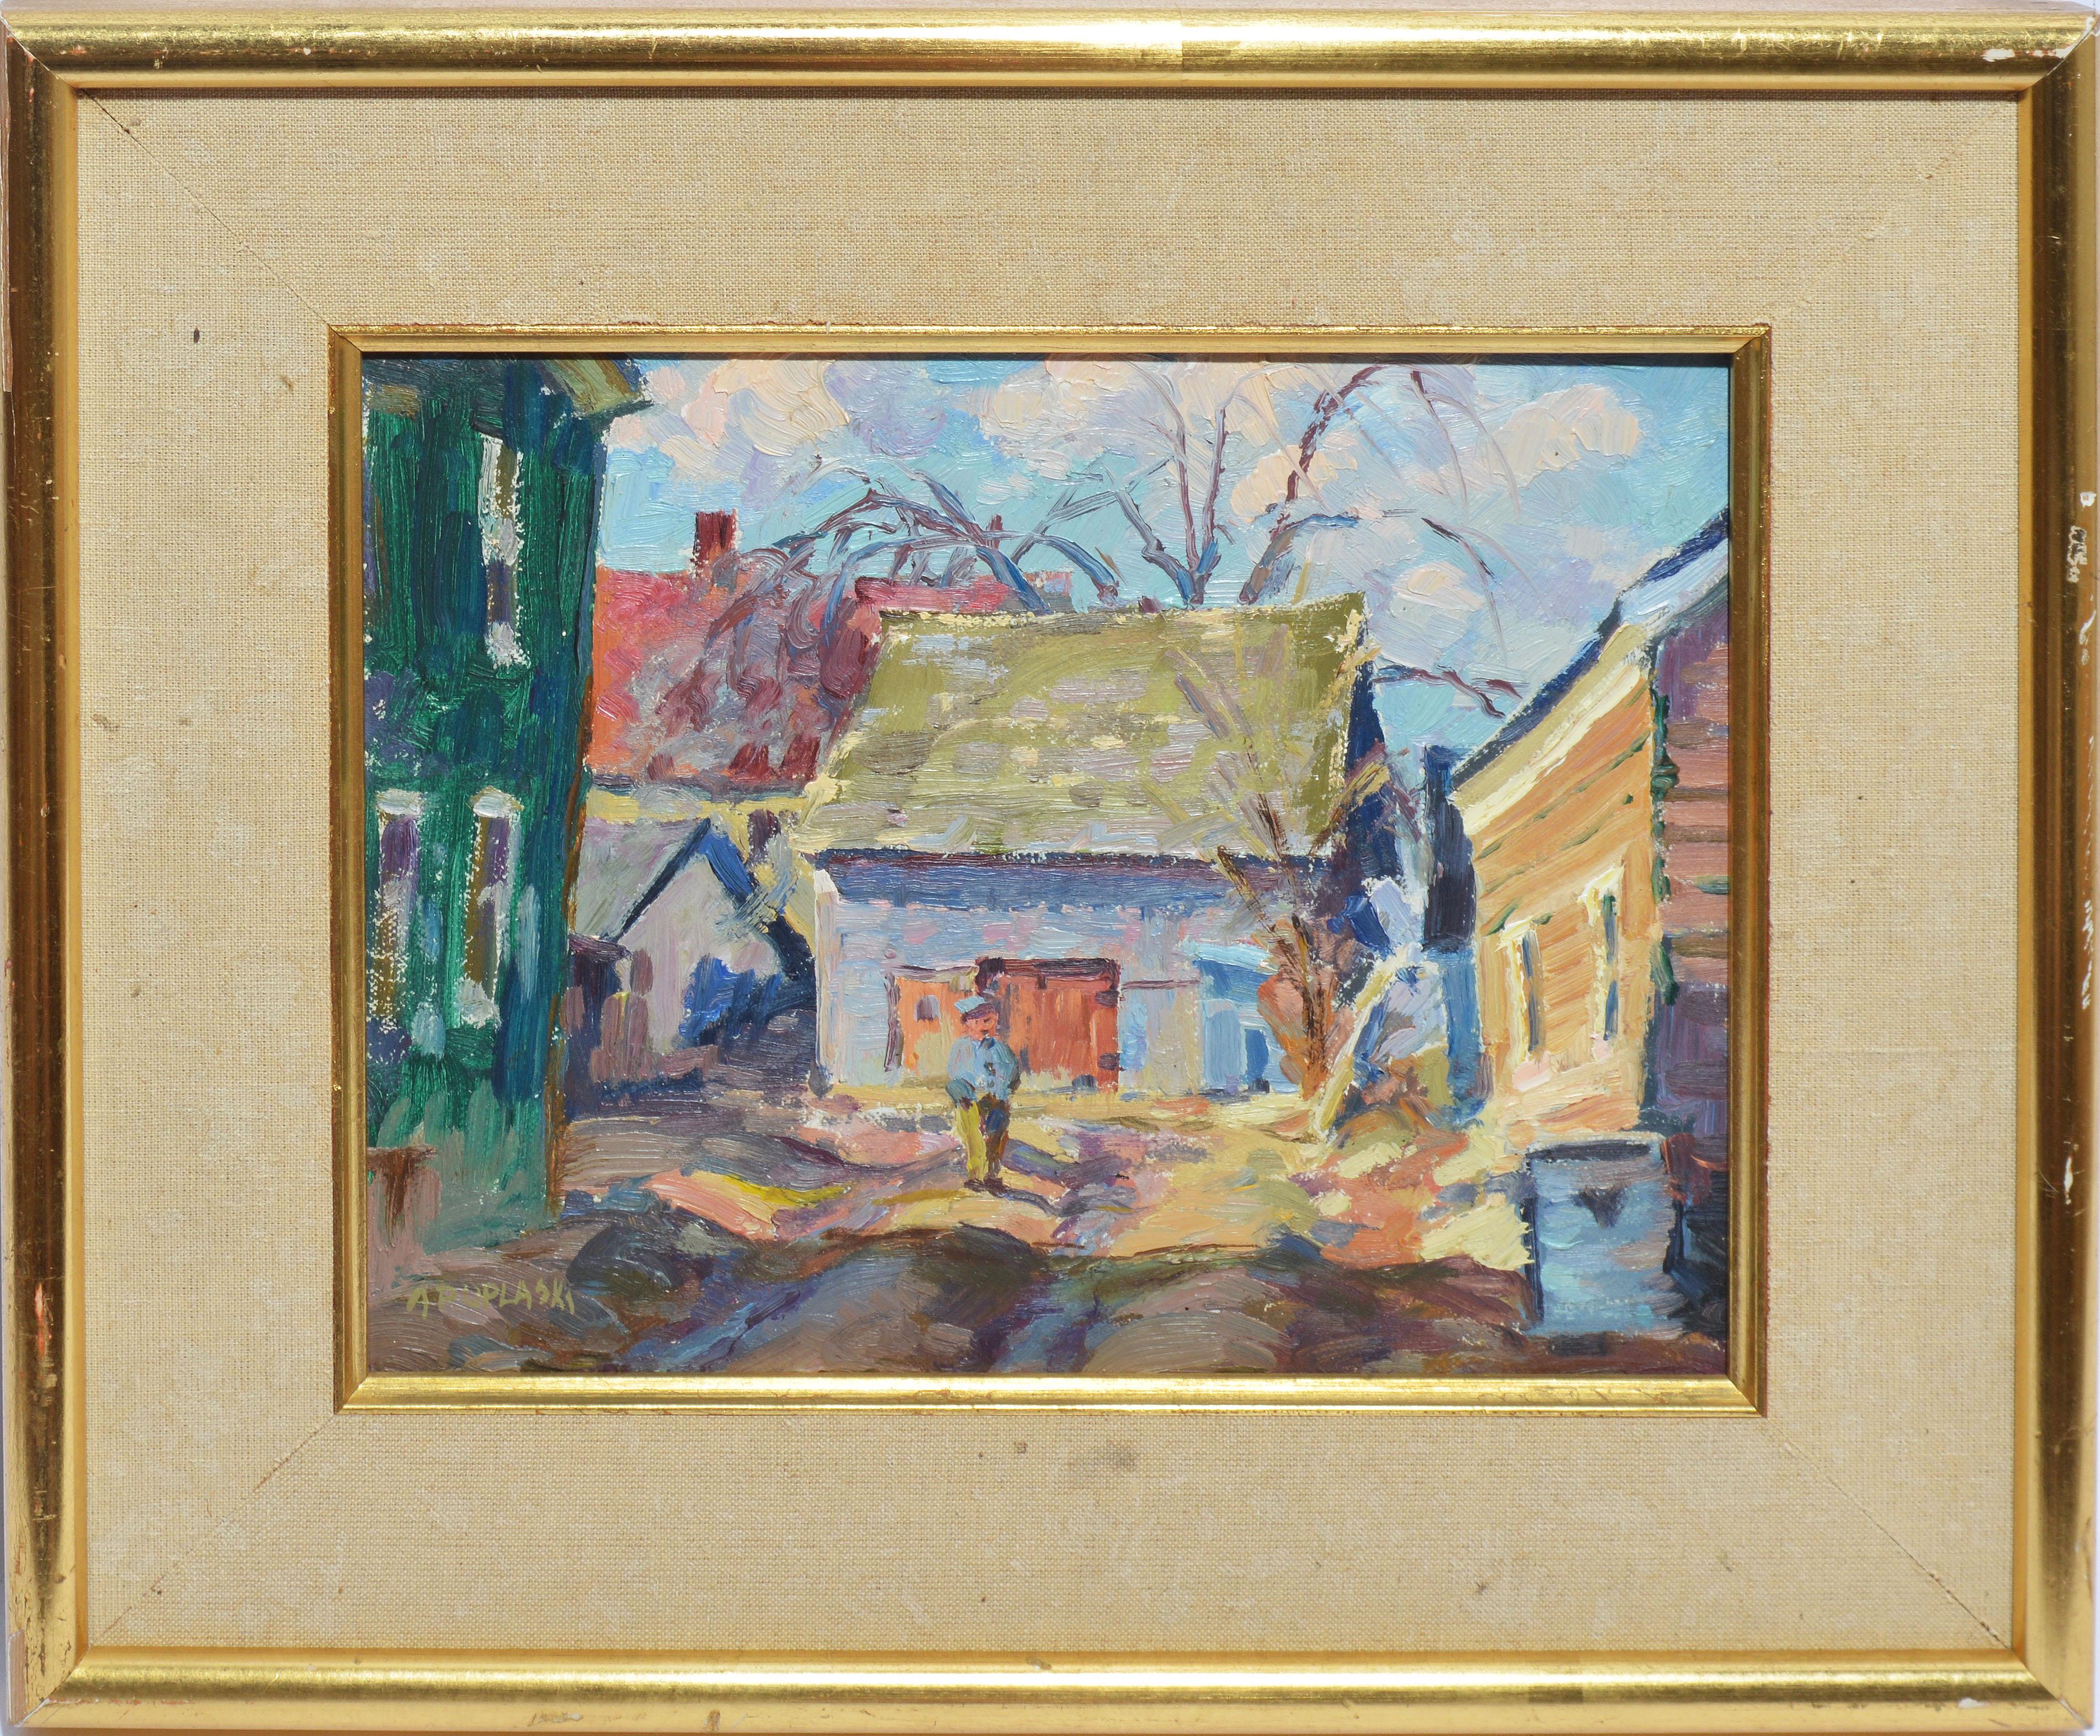 Alexander Poplaski Landscape Painting - American Impressionist New England Town Landscape Oil Painting by Alex Poplaski